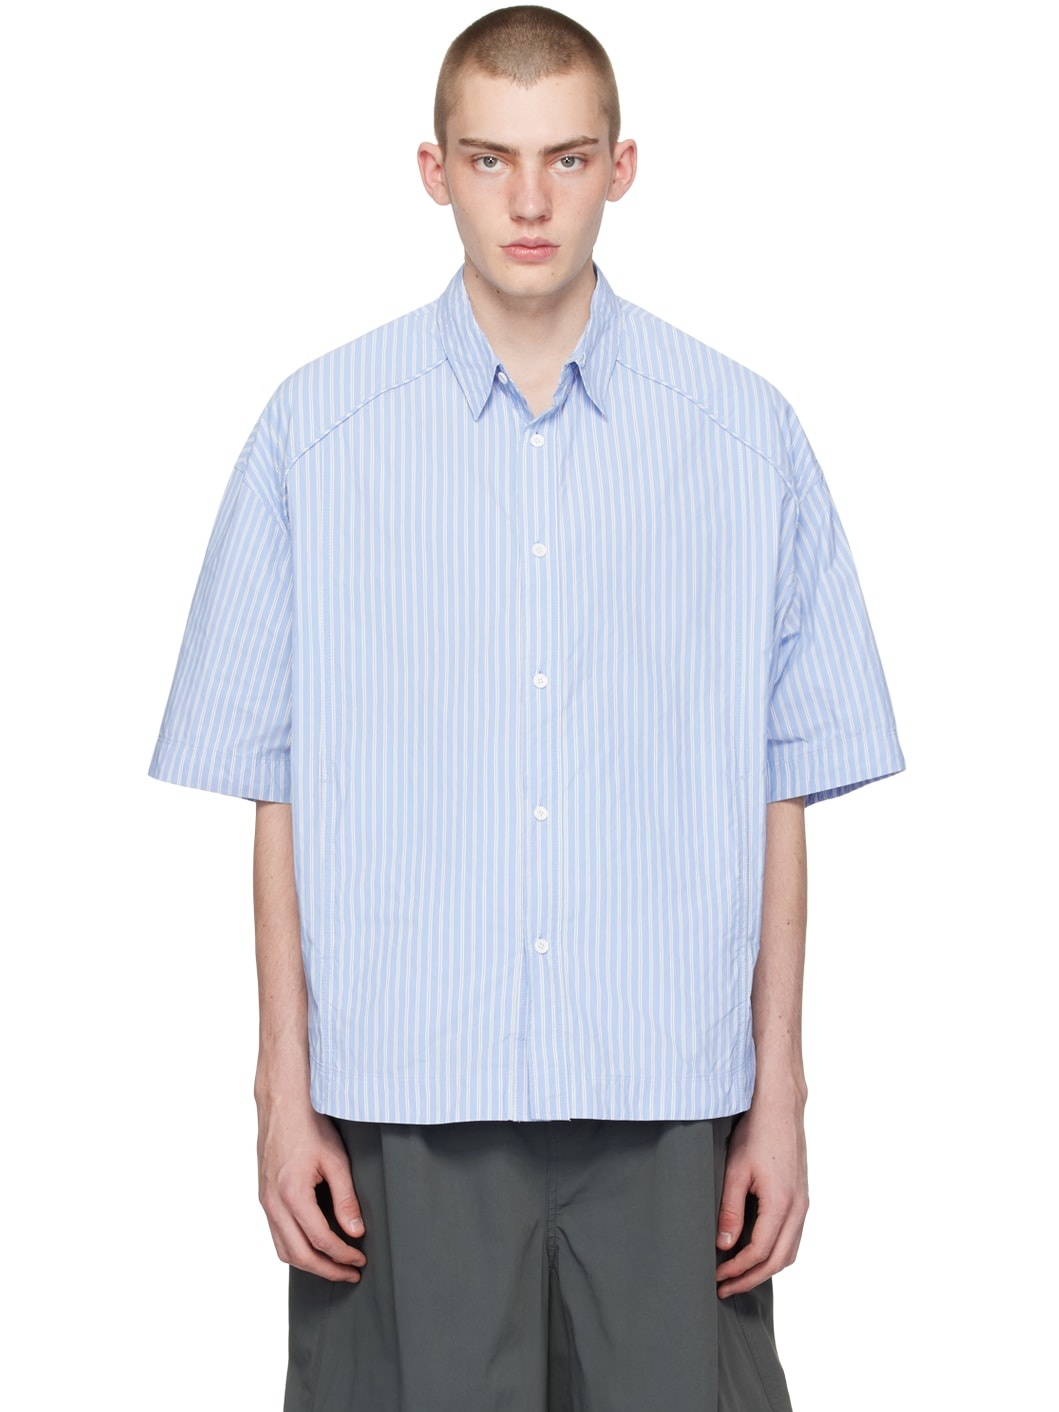 Blue & White Stripe Shirt - 1